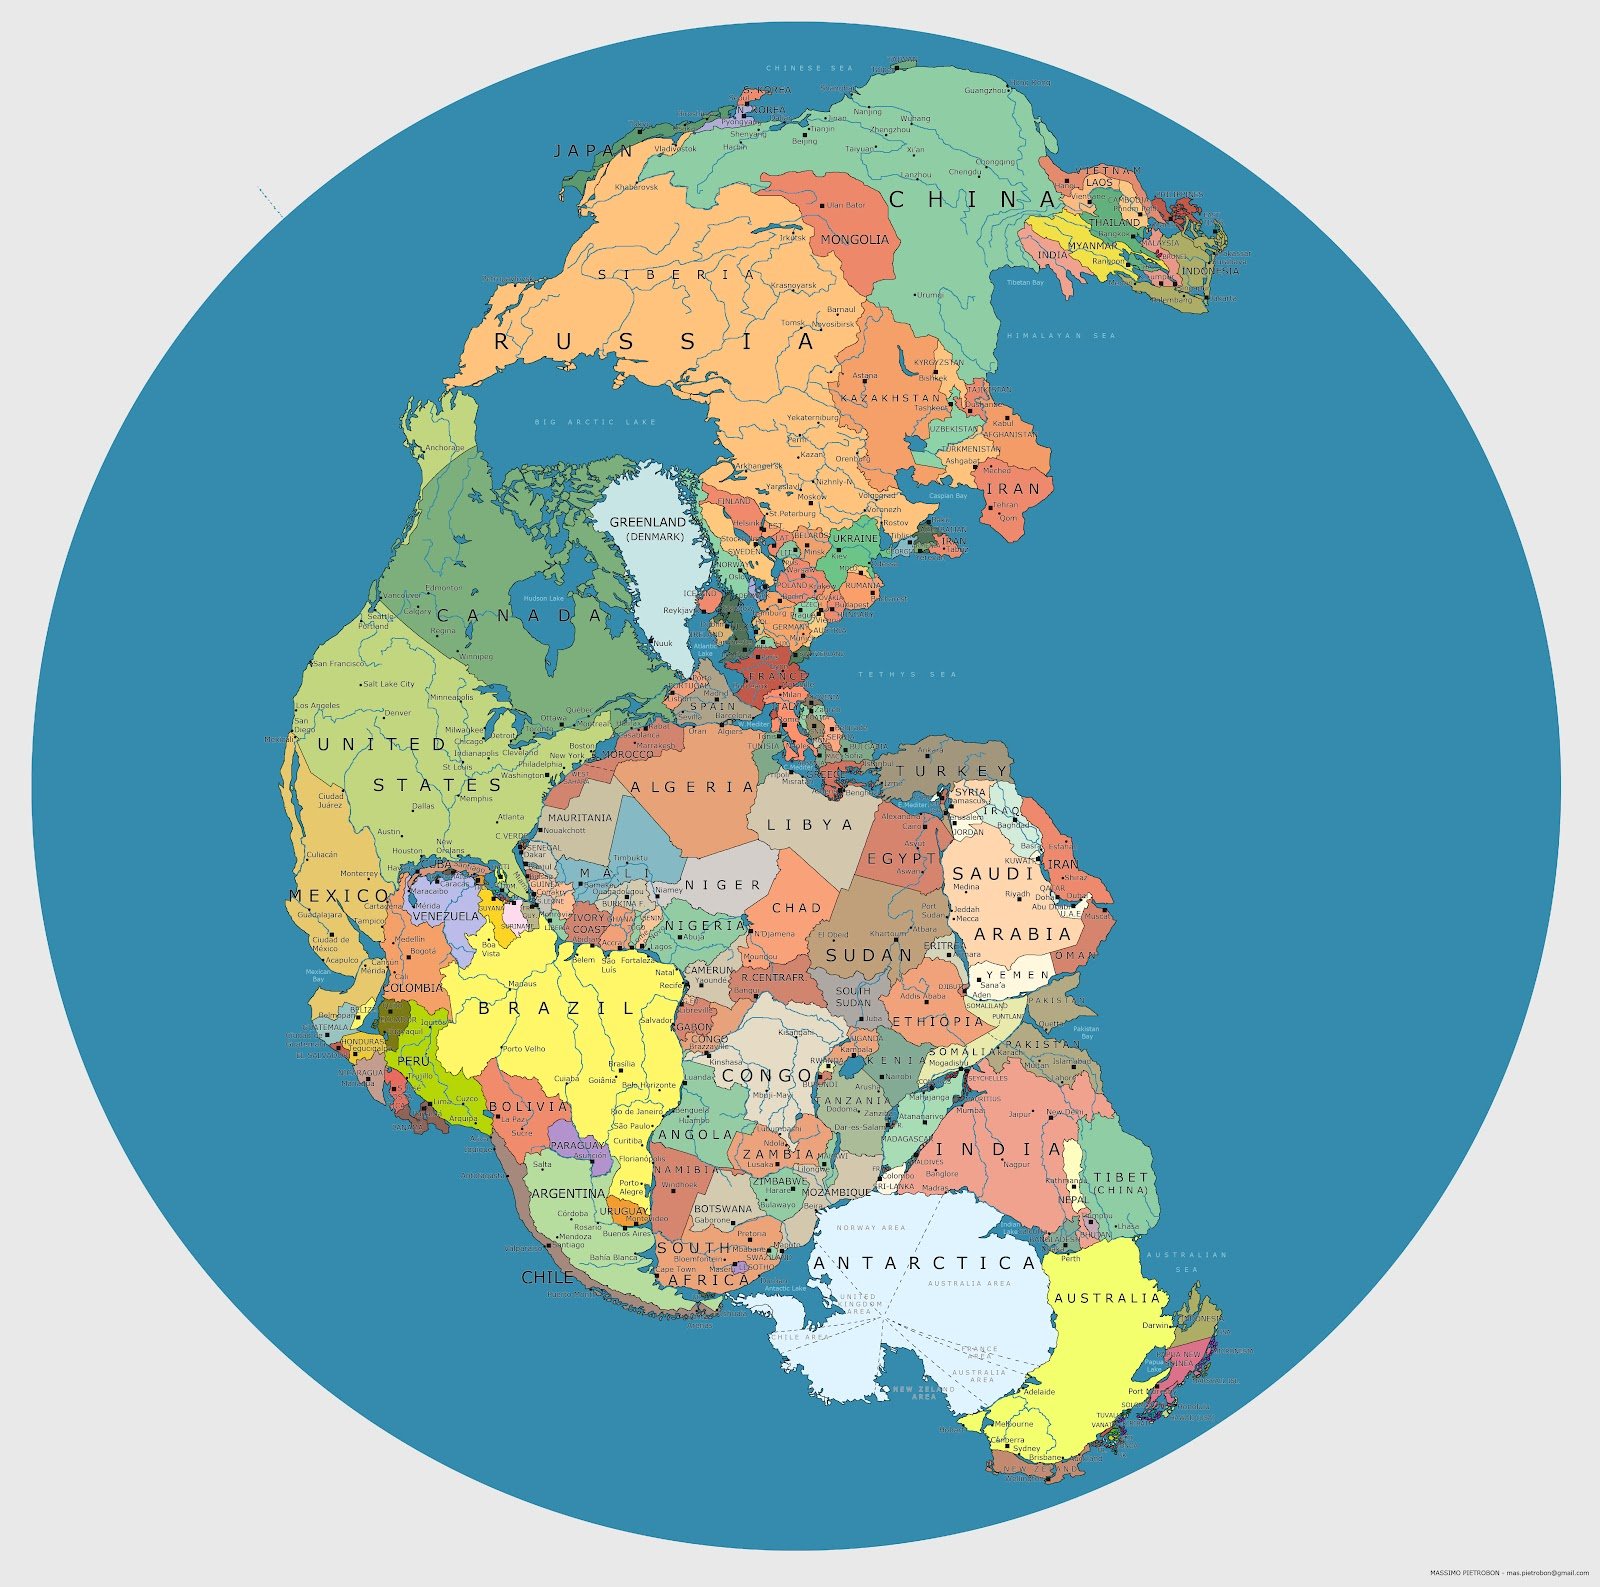 Supercontinente Pangeia